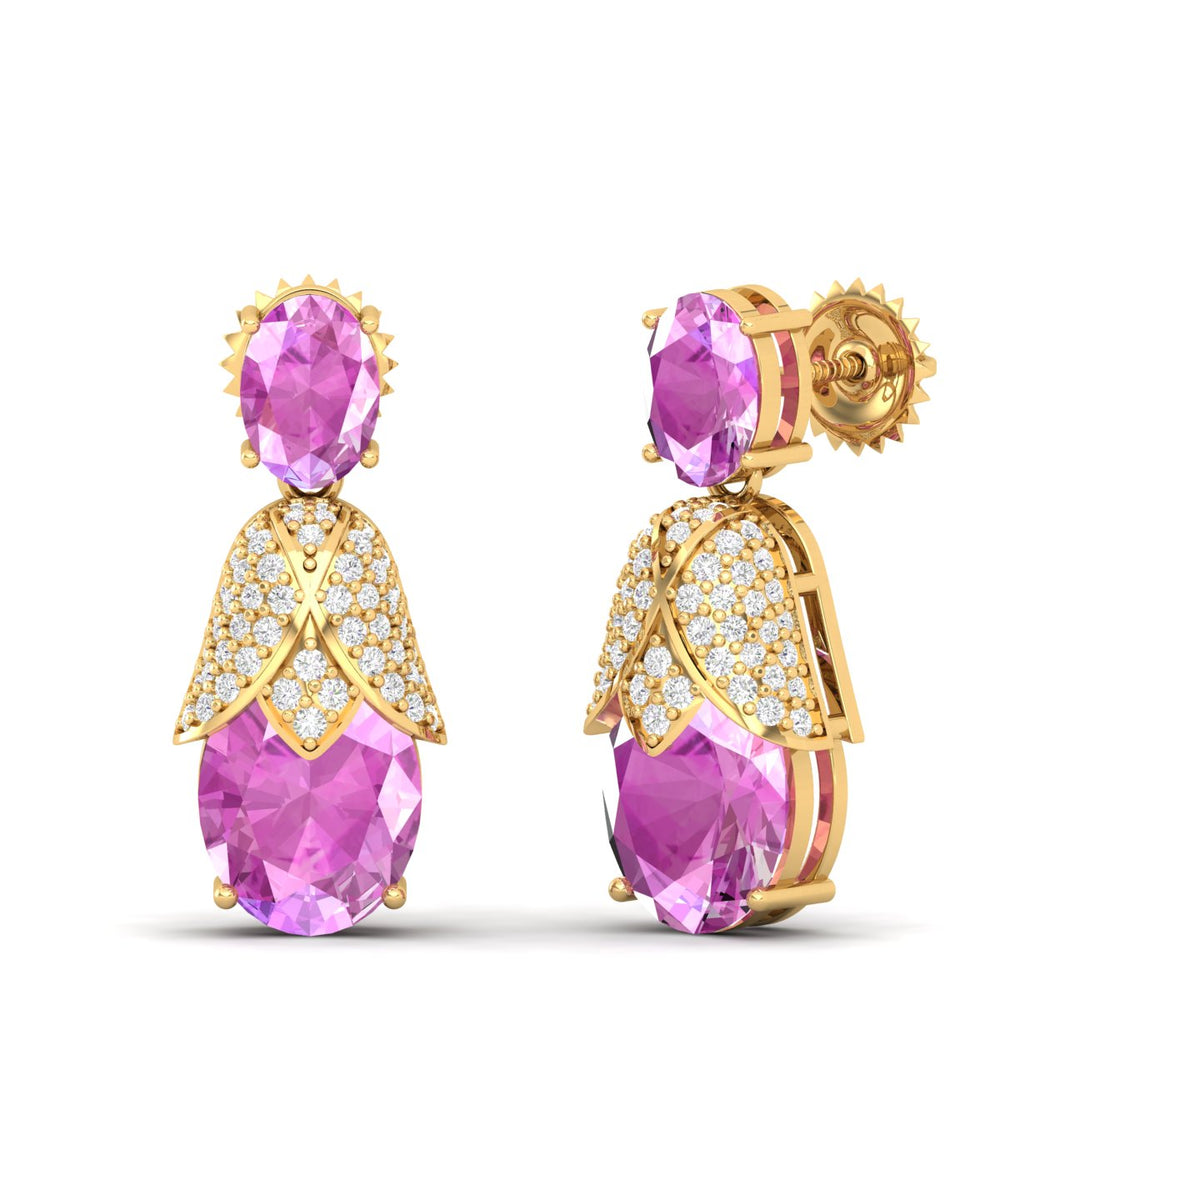 Maurya Bourgeon Pink Amethyst Dangle Earrings with Pave-Set Diamonds